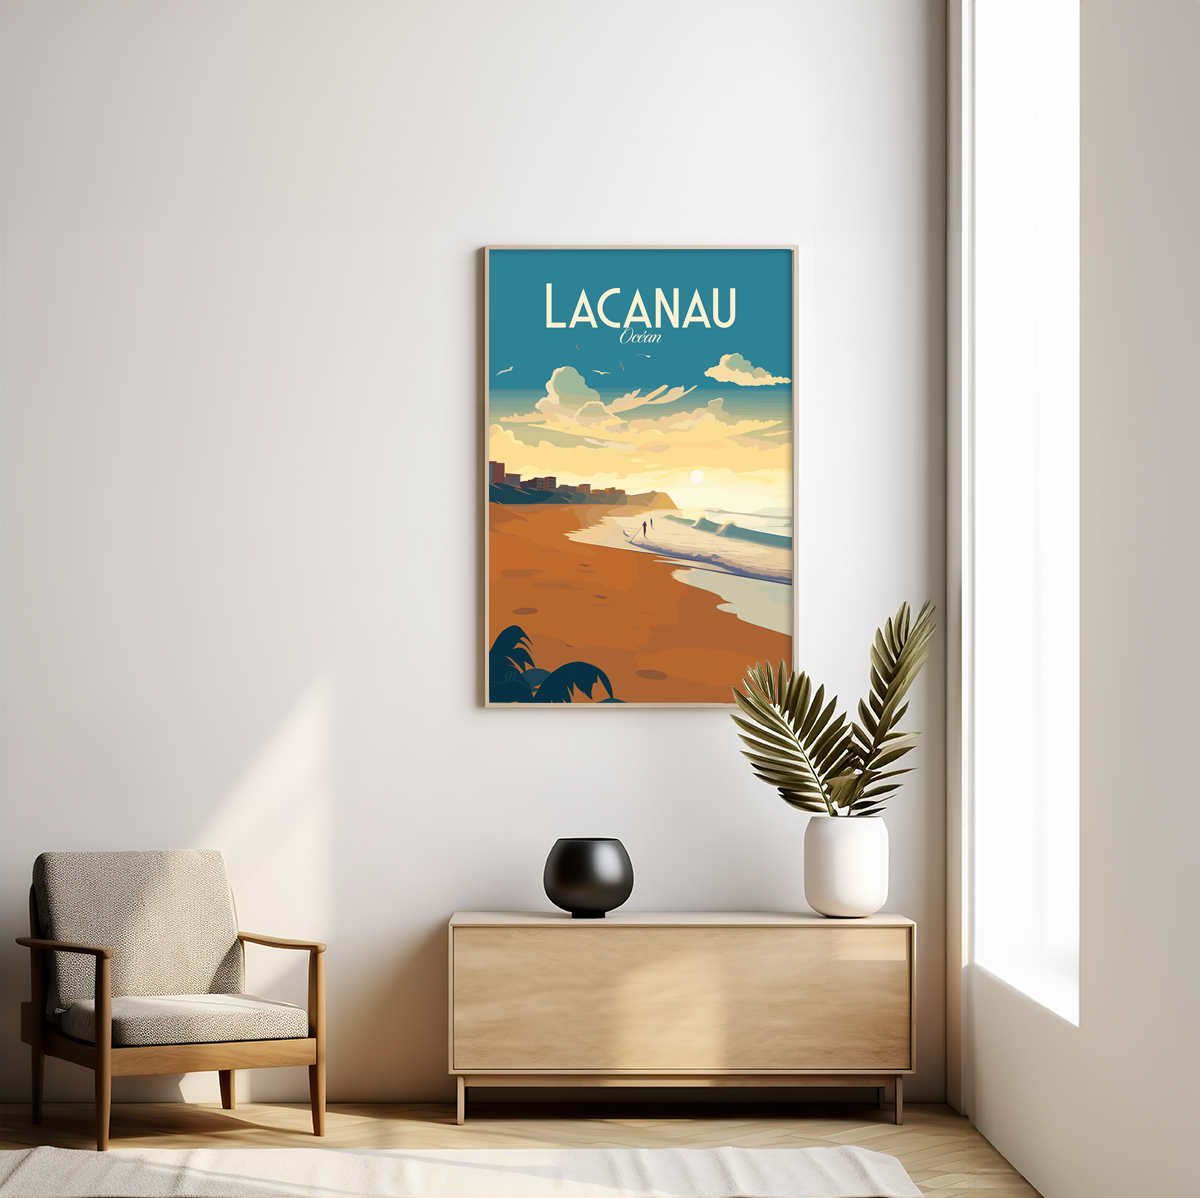 Lacanau poster by bon voyage design